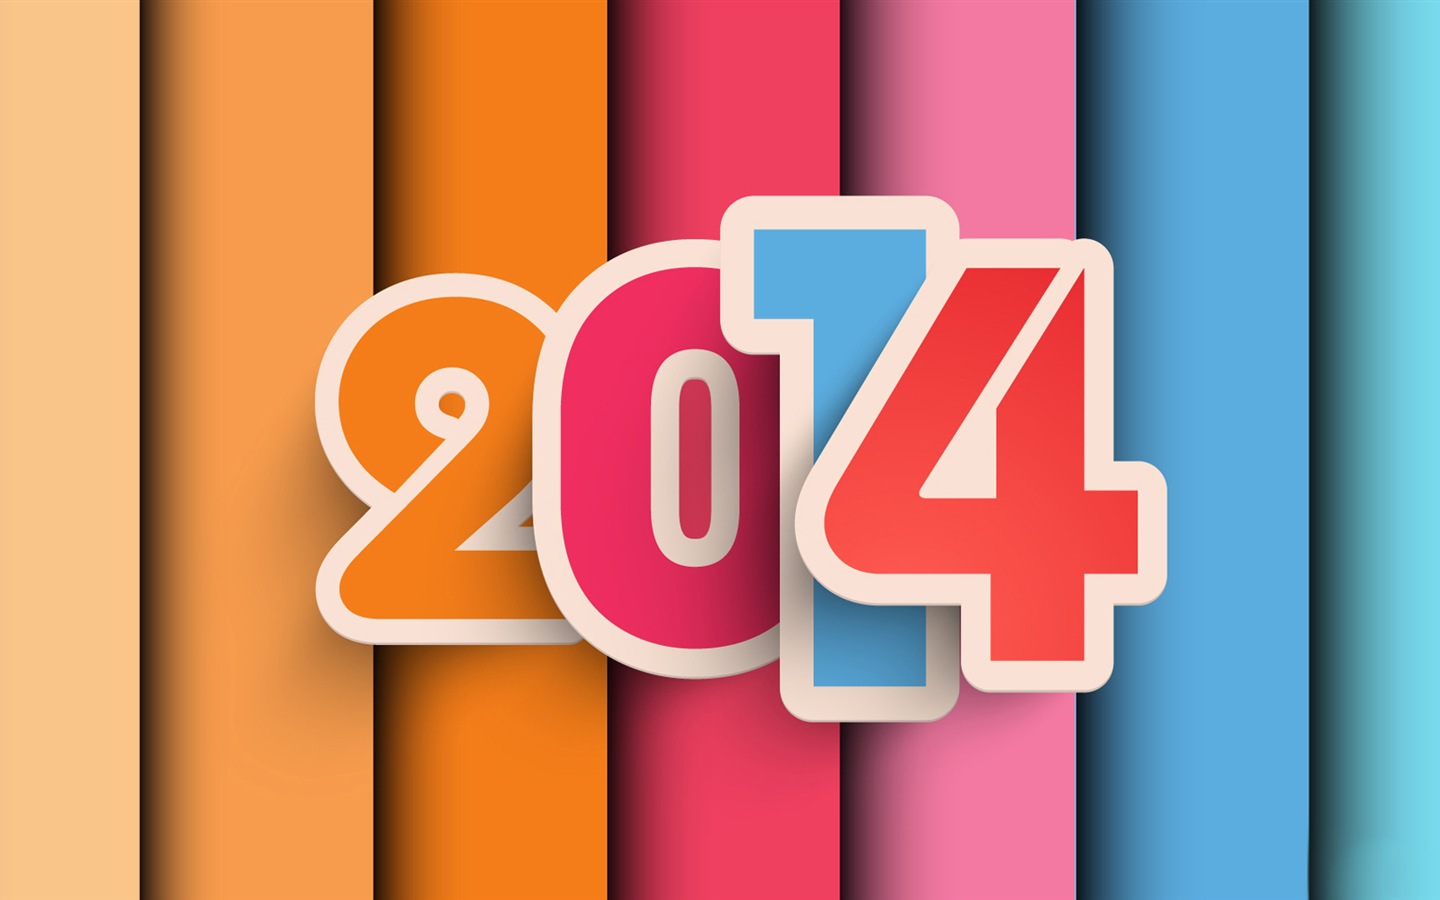 2014 Neues Jahr Theme HD Wallpapers (1) #9 - 1440x900